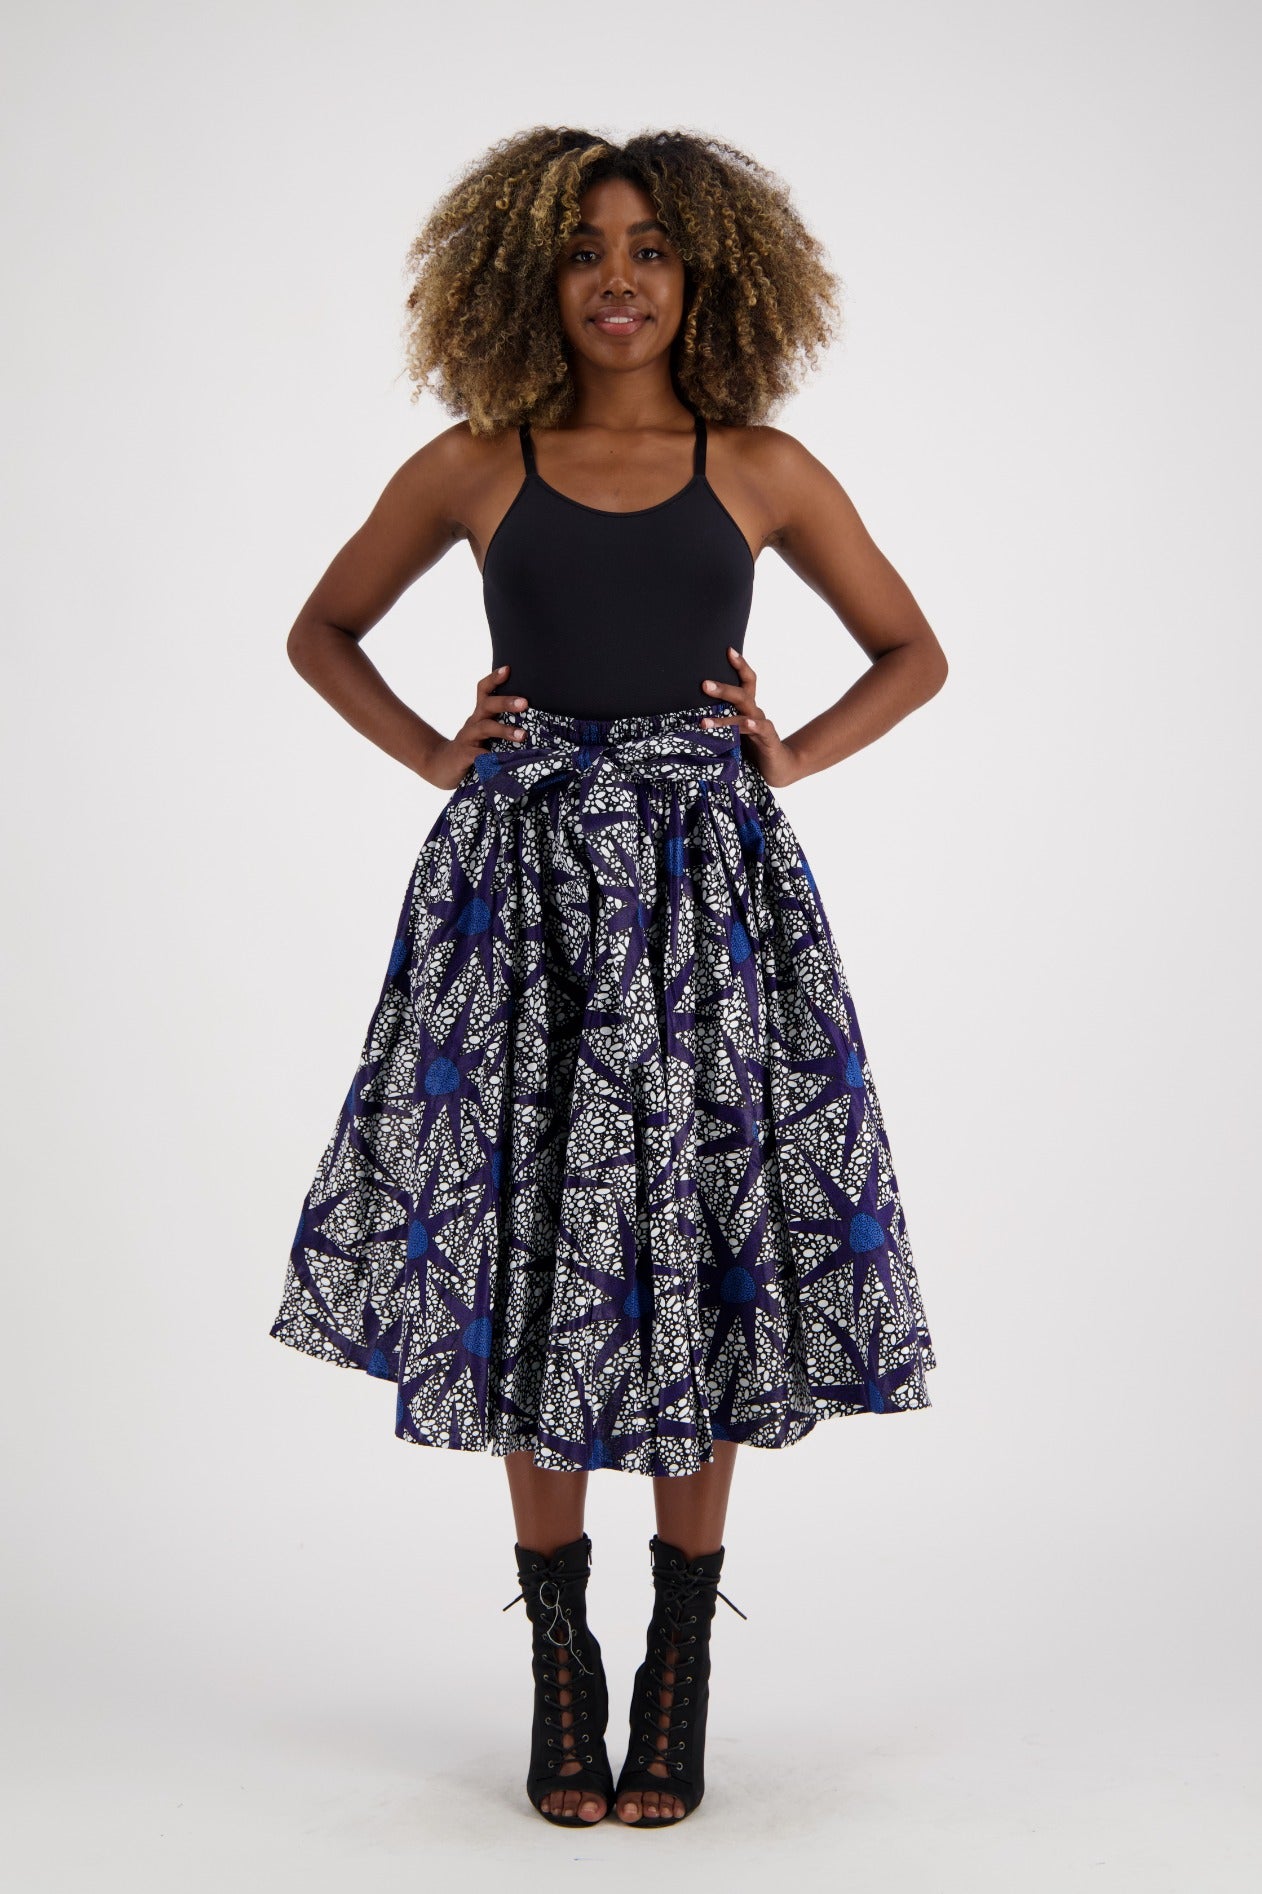 Mid-Length African Print Skirt 16321-236 - Advance Apparels Inc